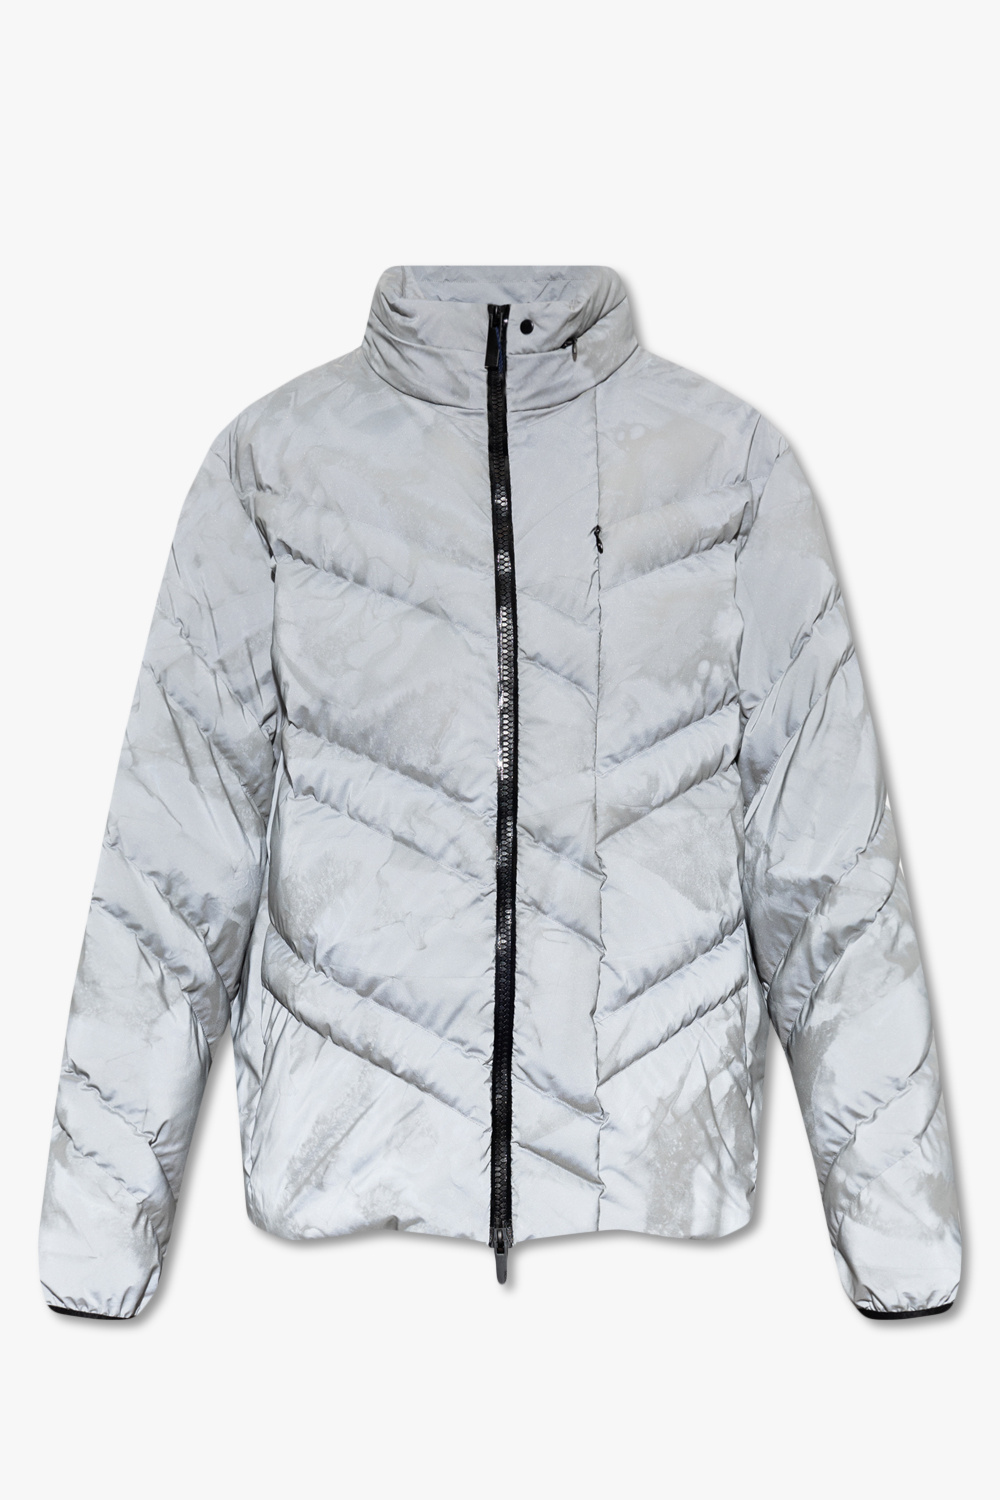 Moncler ‘Takao’ reflective down jacket